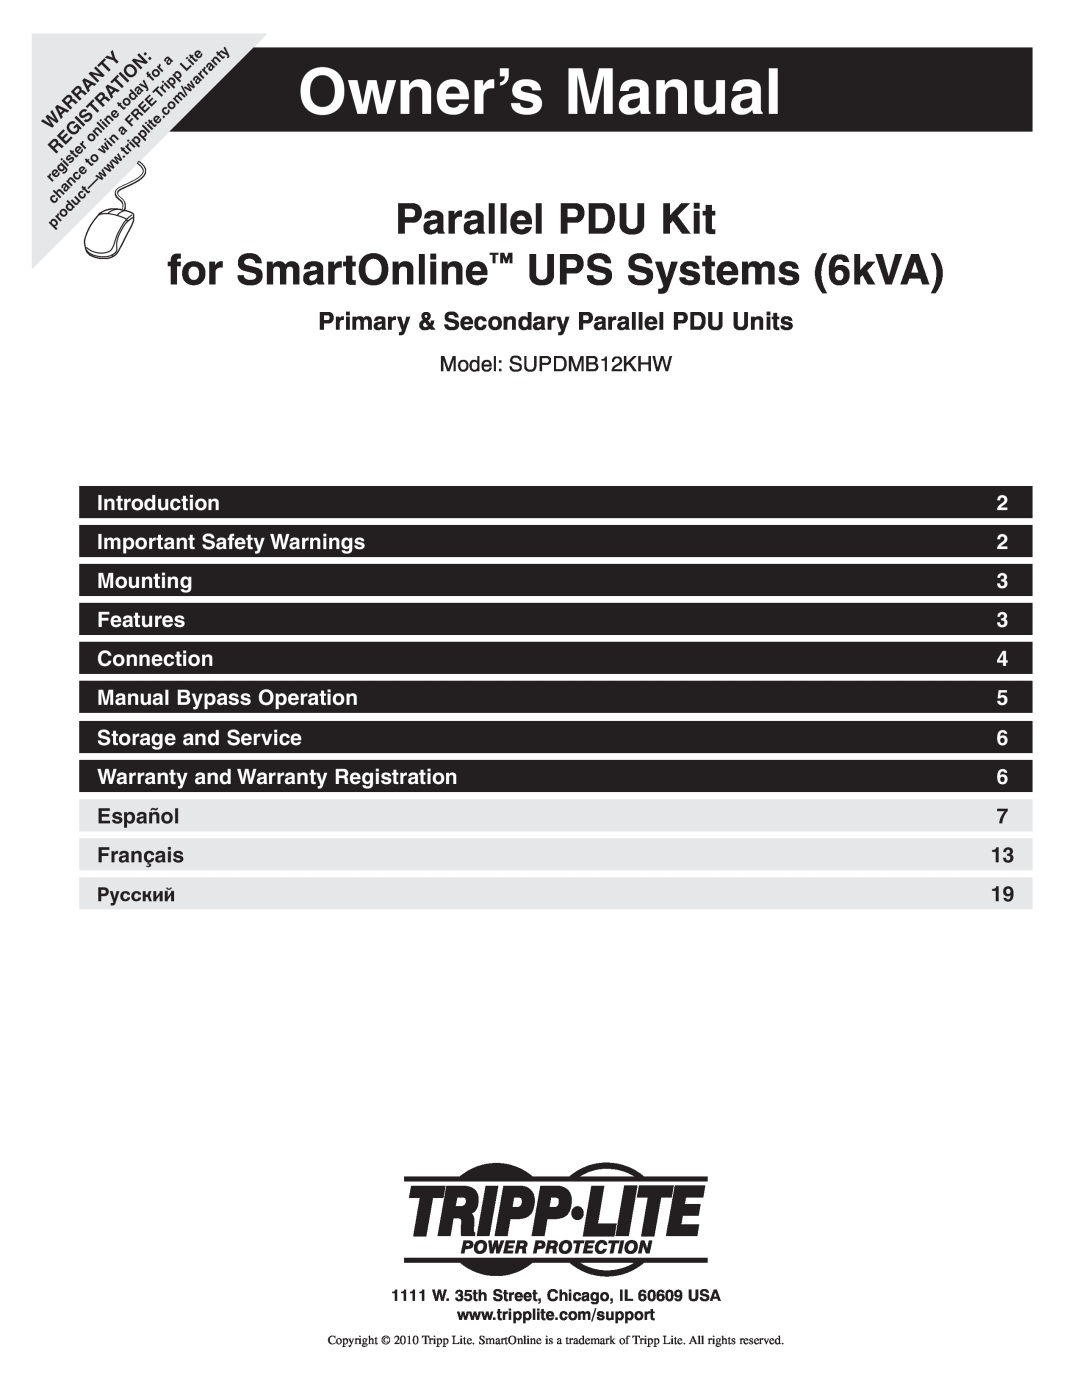 Tripp Lite SUPDMB12KHW owner manual Owner’s Manual, Parallel PDU Kit SmartOnline UPS Systems 6kVA 